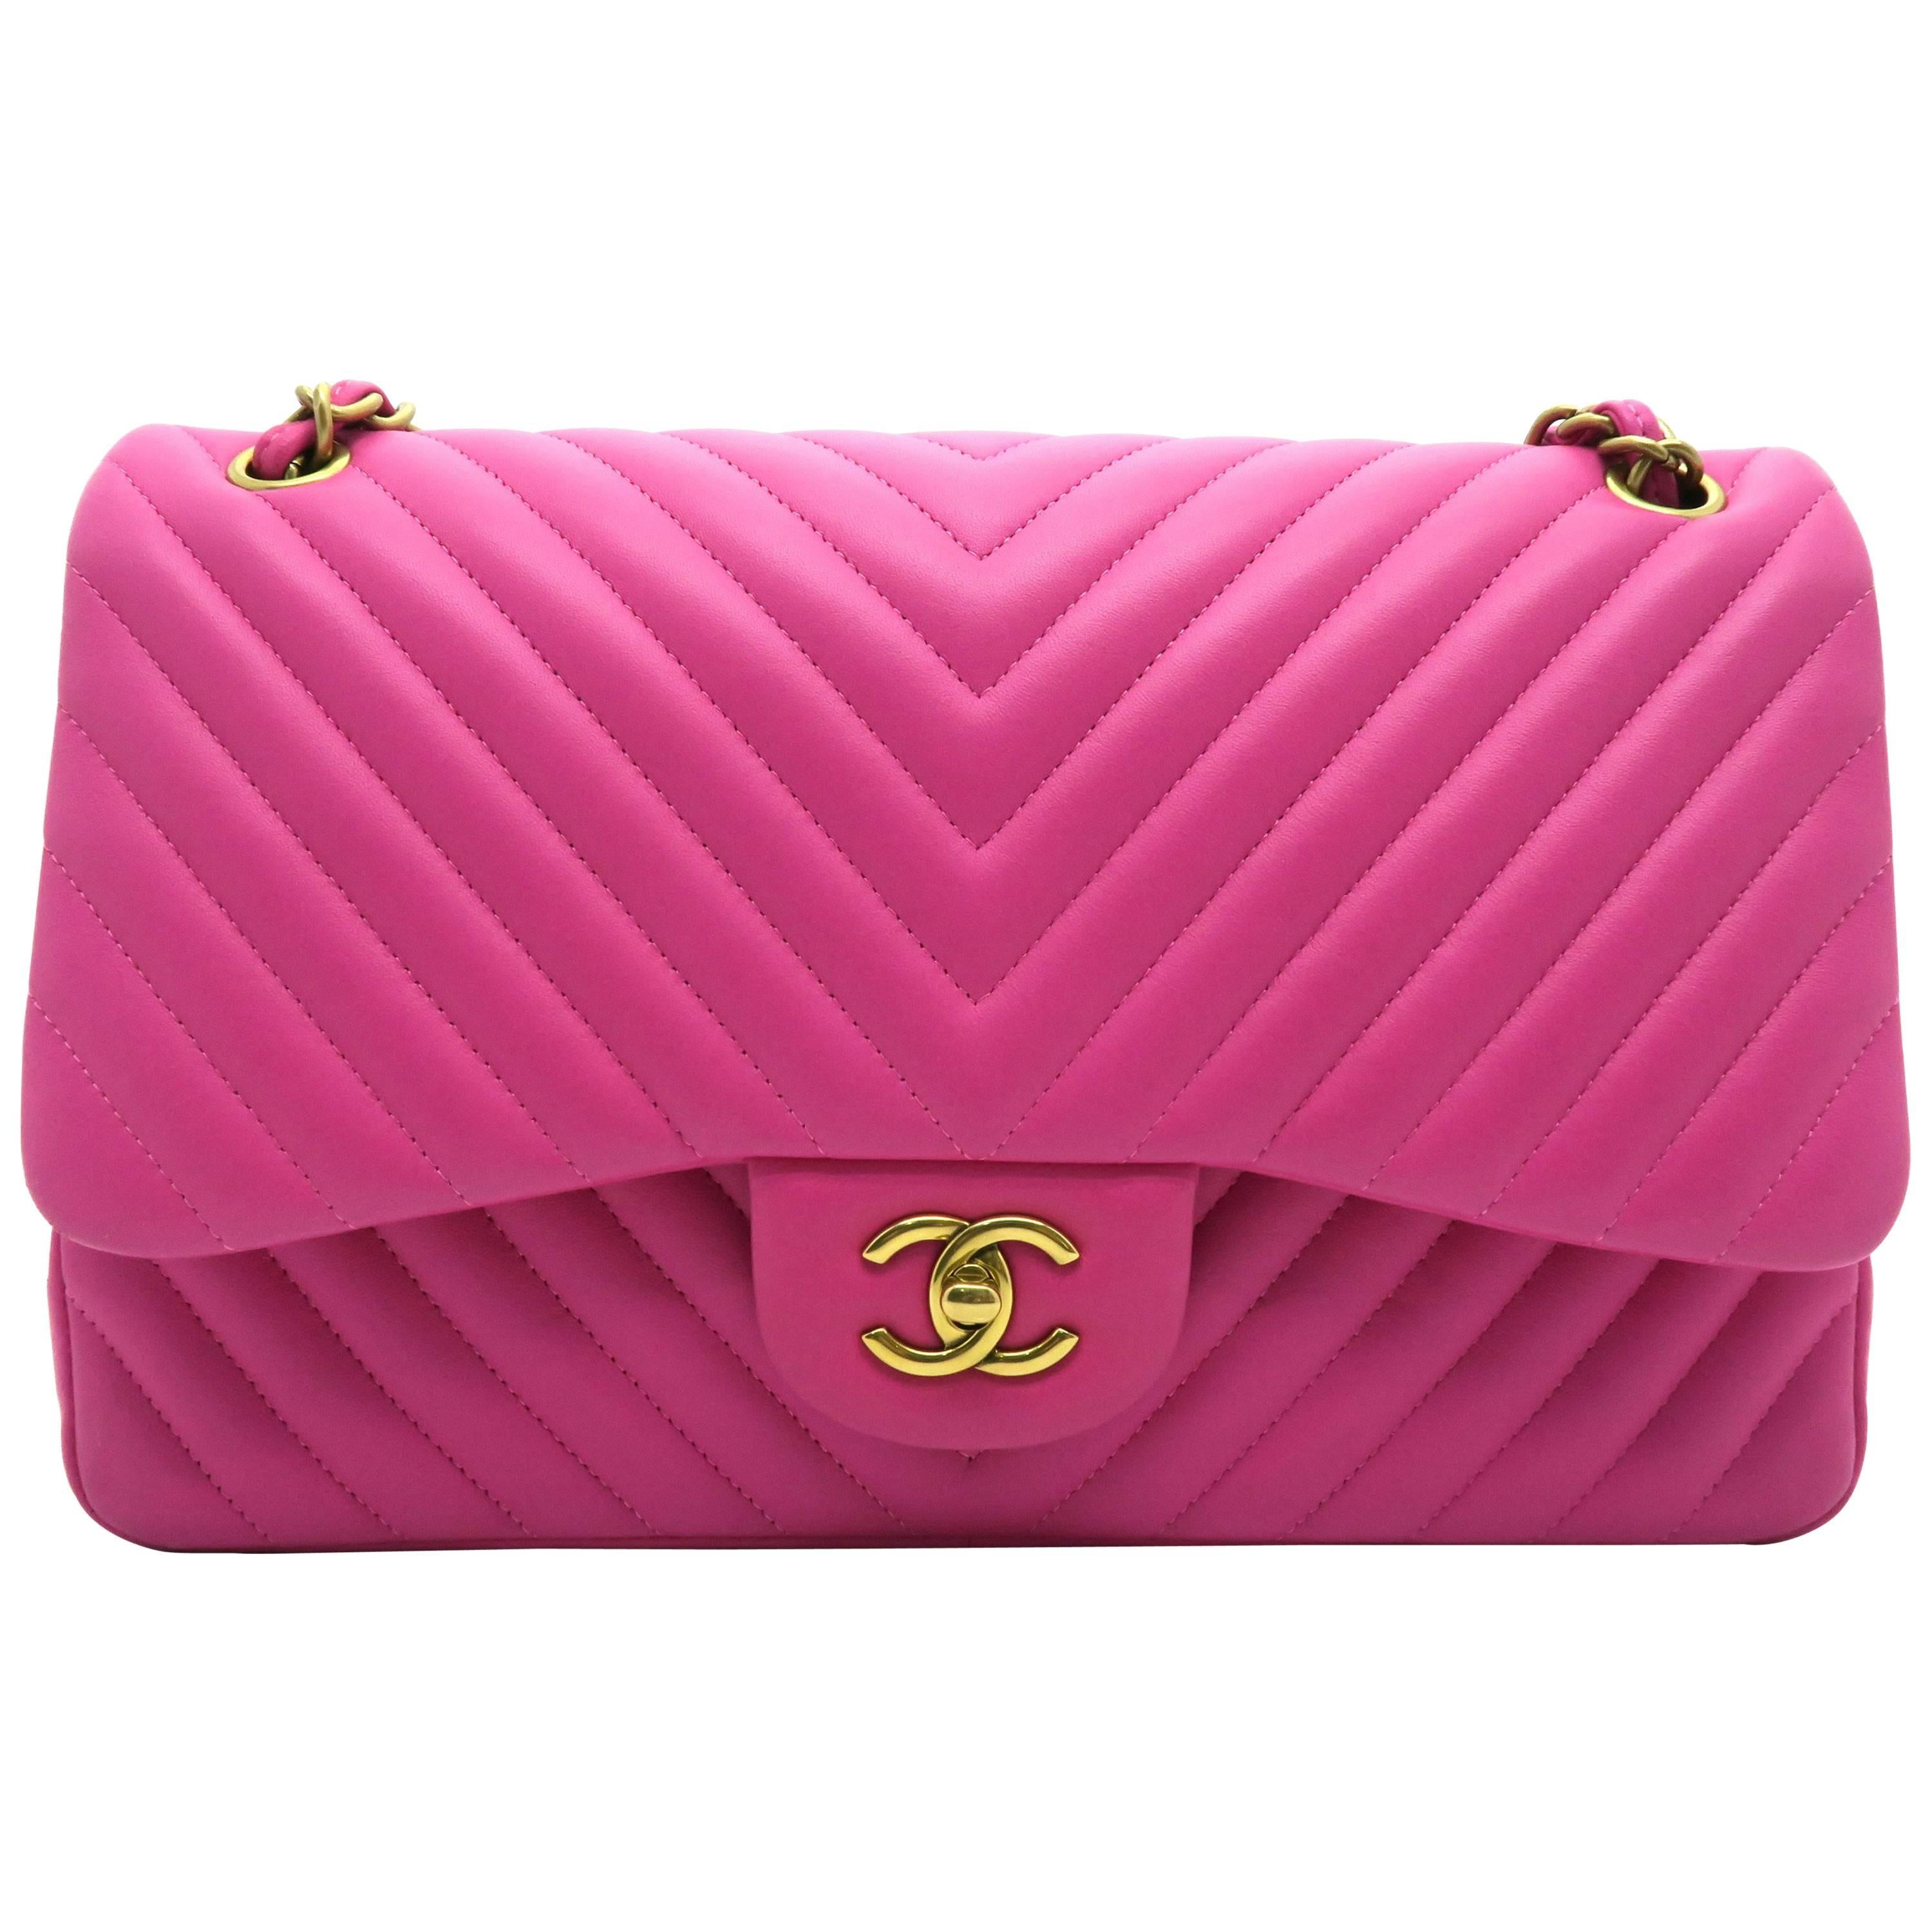 Chanel Chevron Double Flap Pink Lambskin Leather Chain Shoulder Bag